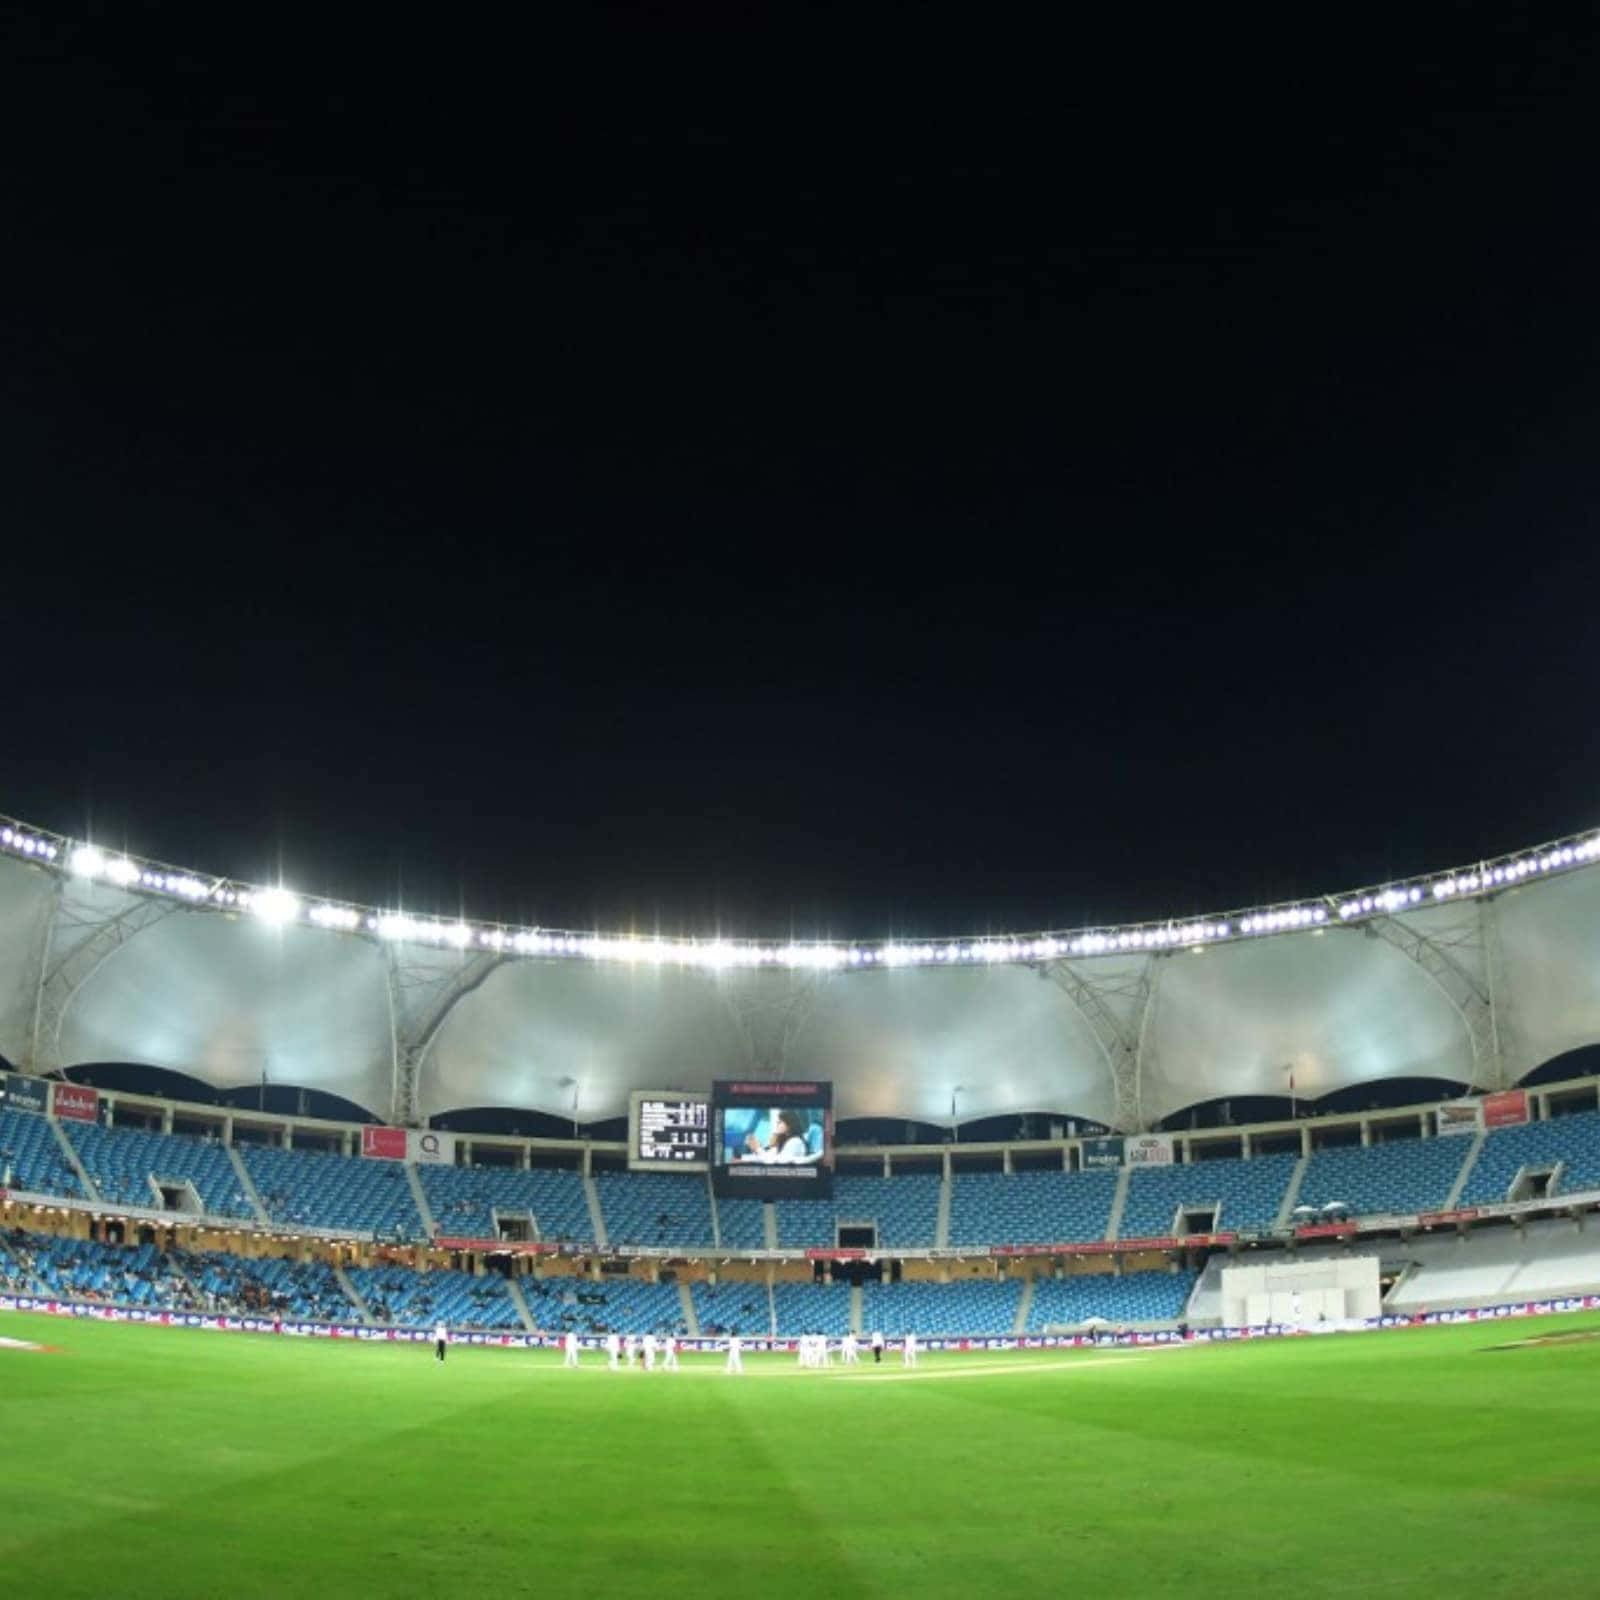 A Stadium With Lights On At Night